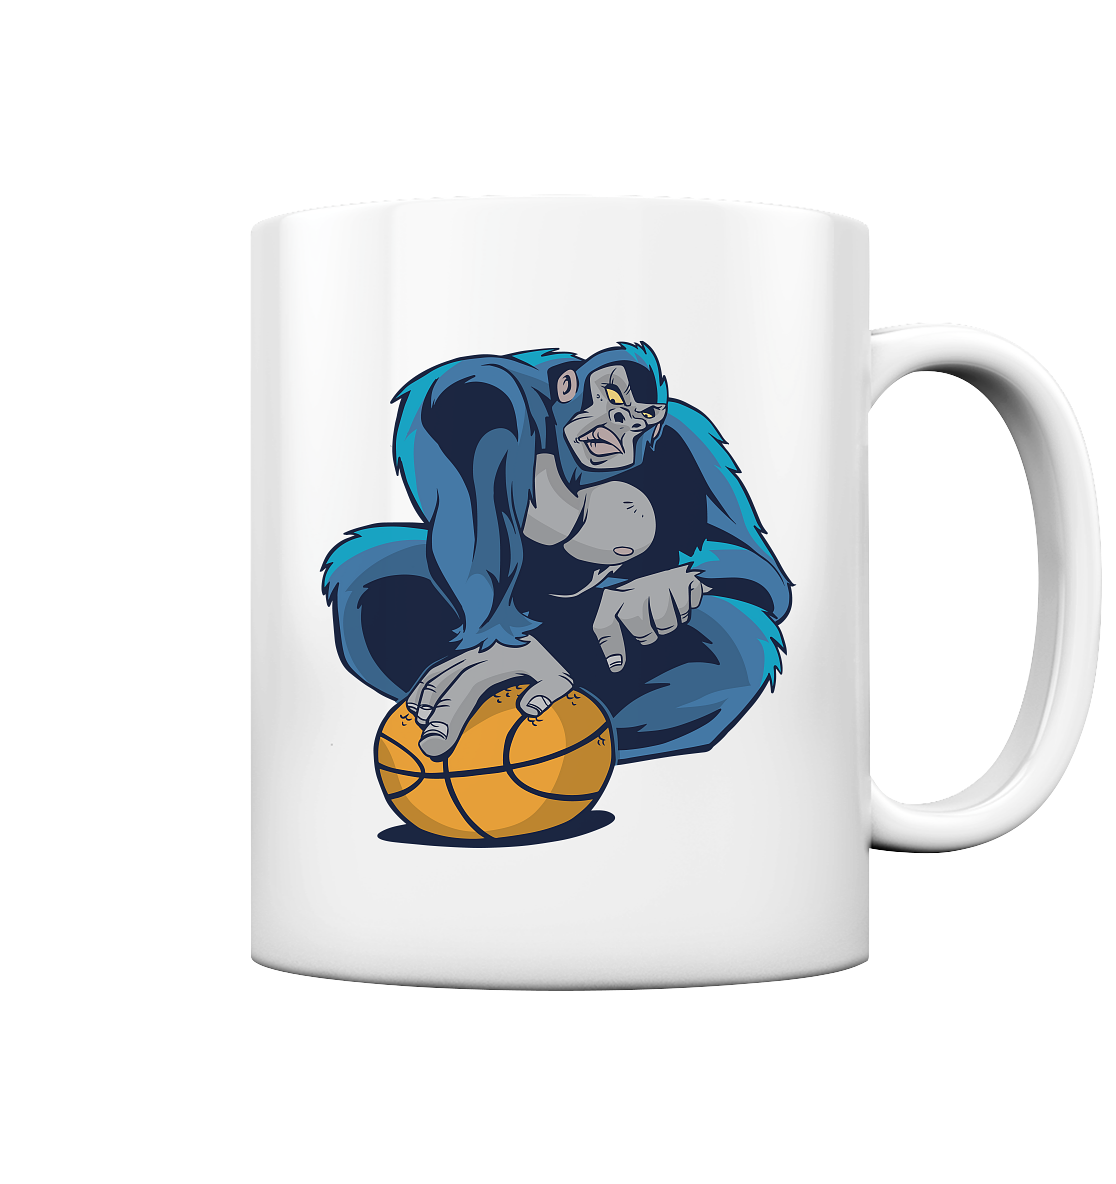 Basketball Gorilla - Tasse glossy